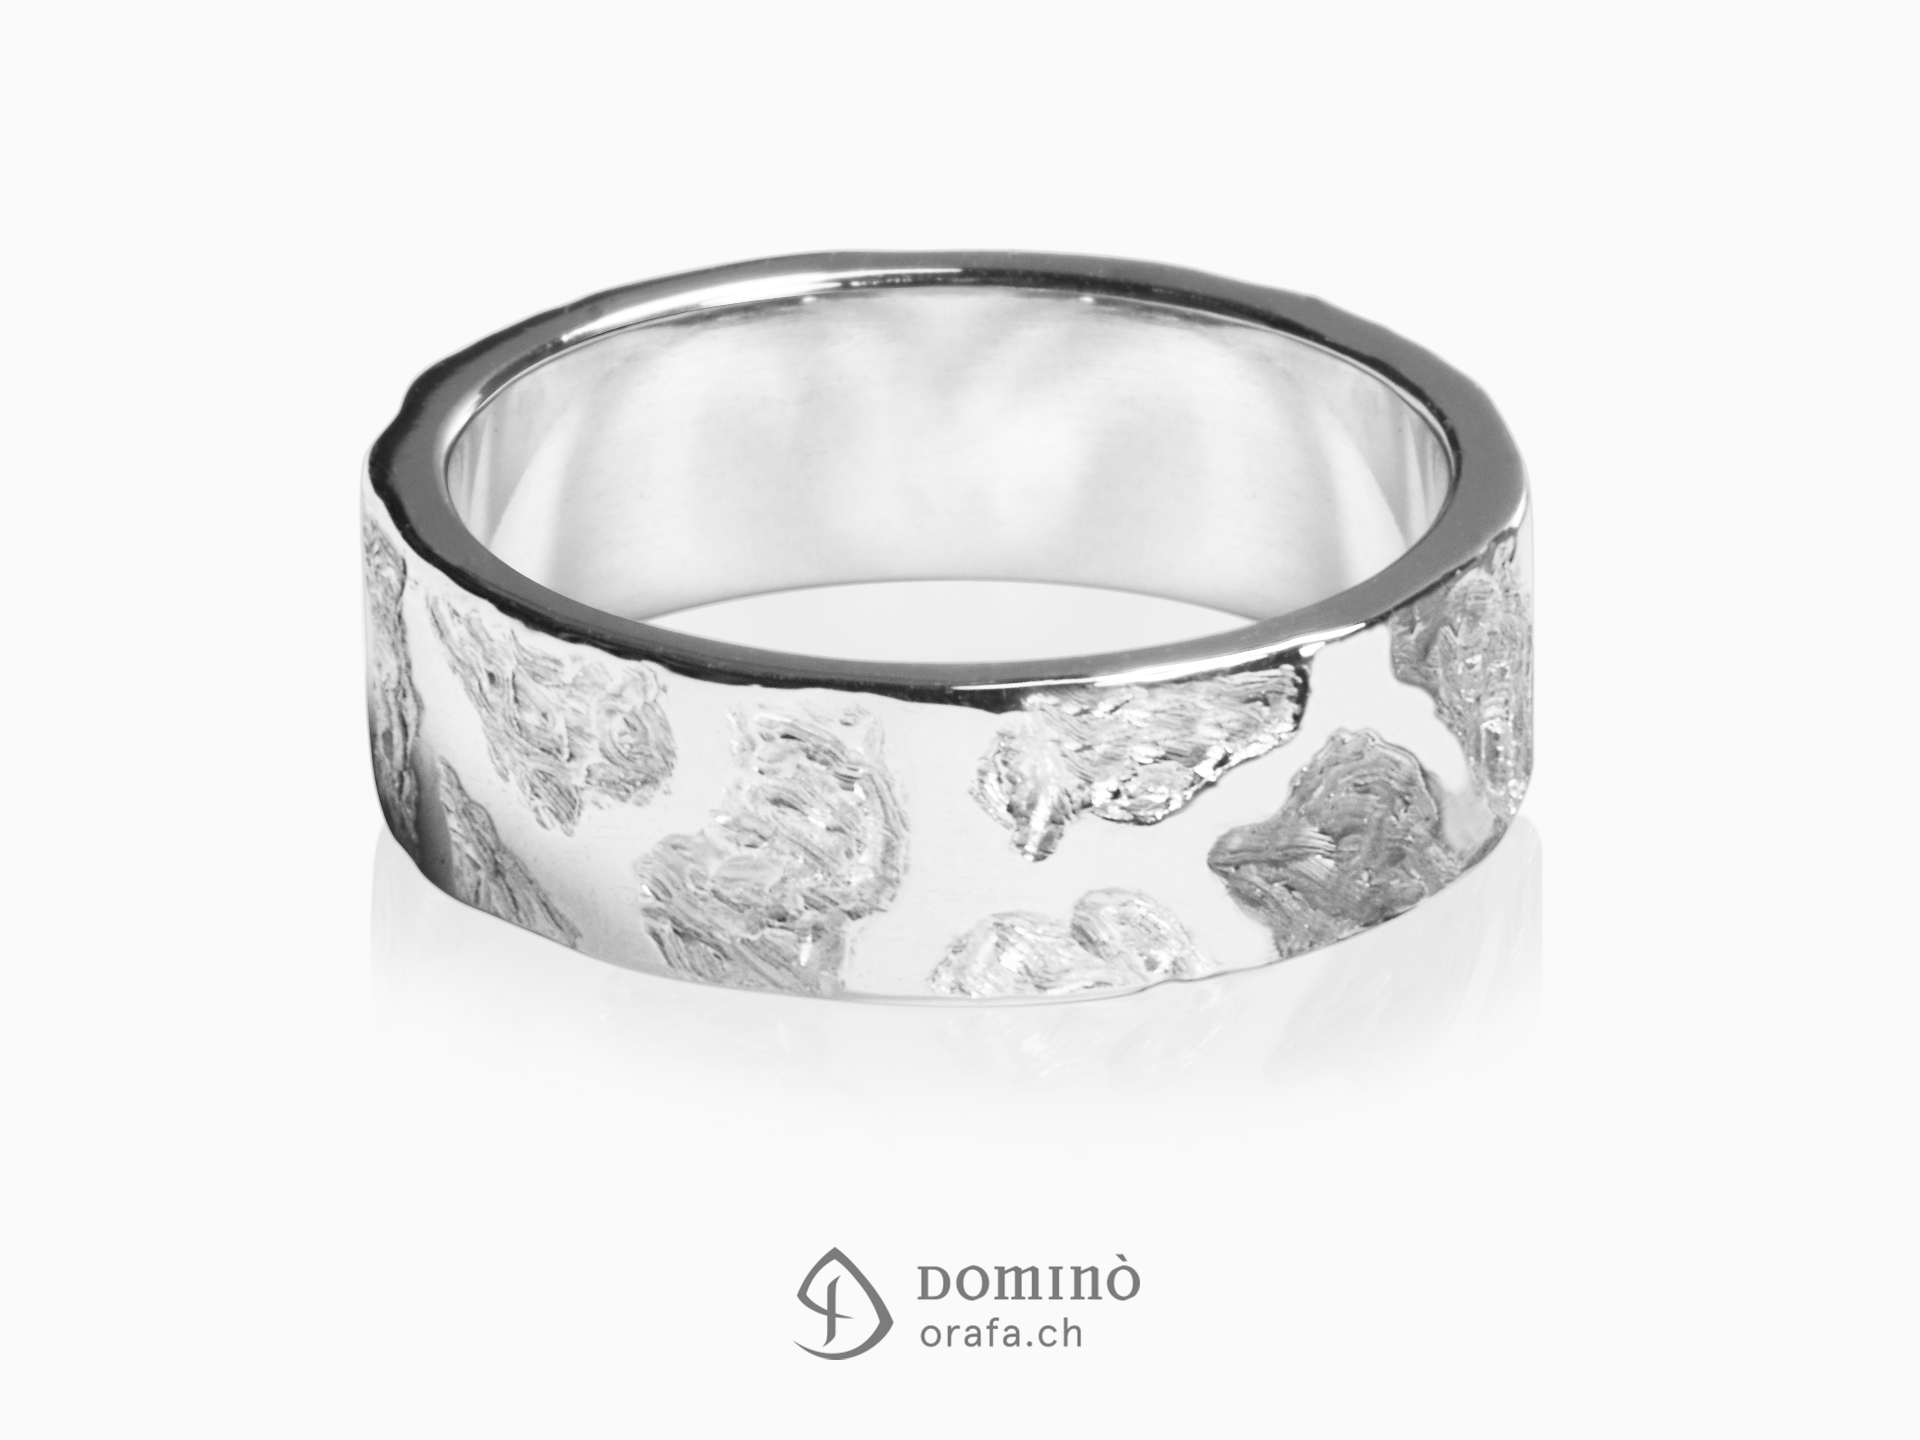 Irregular Corteccia/polished rings